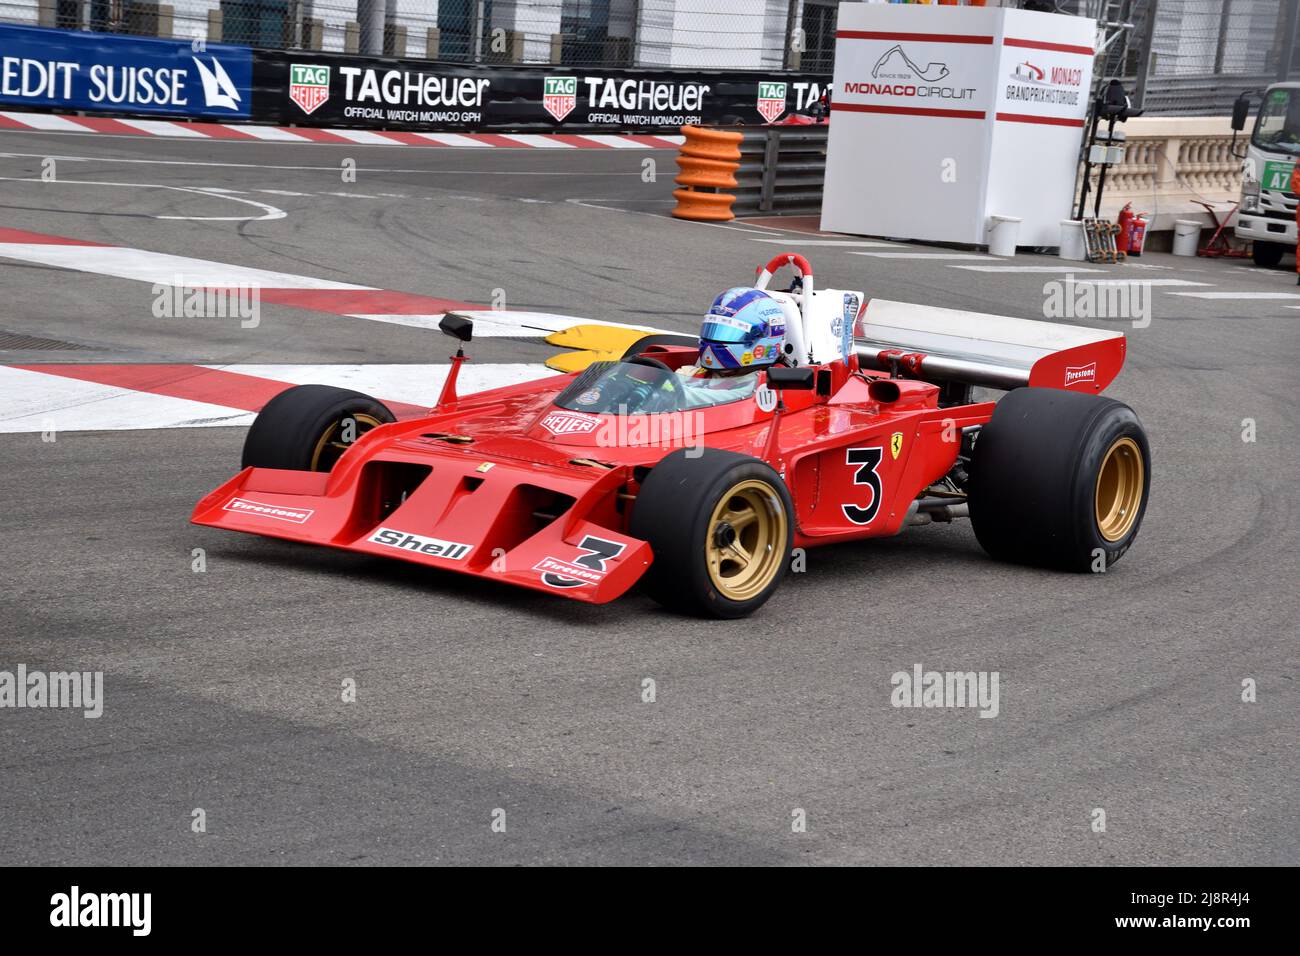 Historic monaco grand prix 2022 - saturday qualifying and sunday race - Ferrari 312B3 prototype 'Spazzaneve', never raced Stock Photo